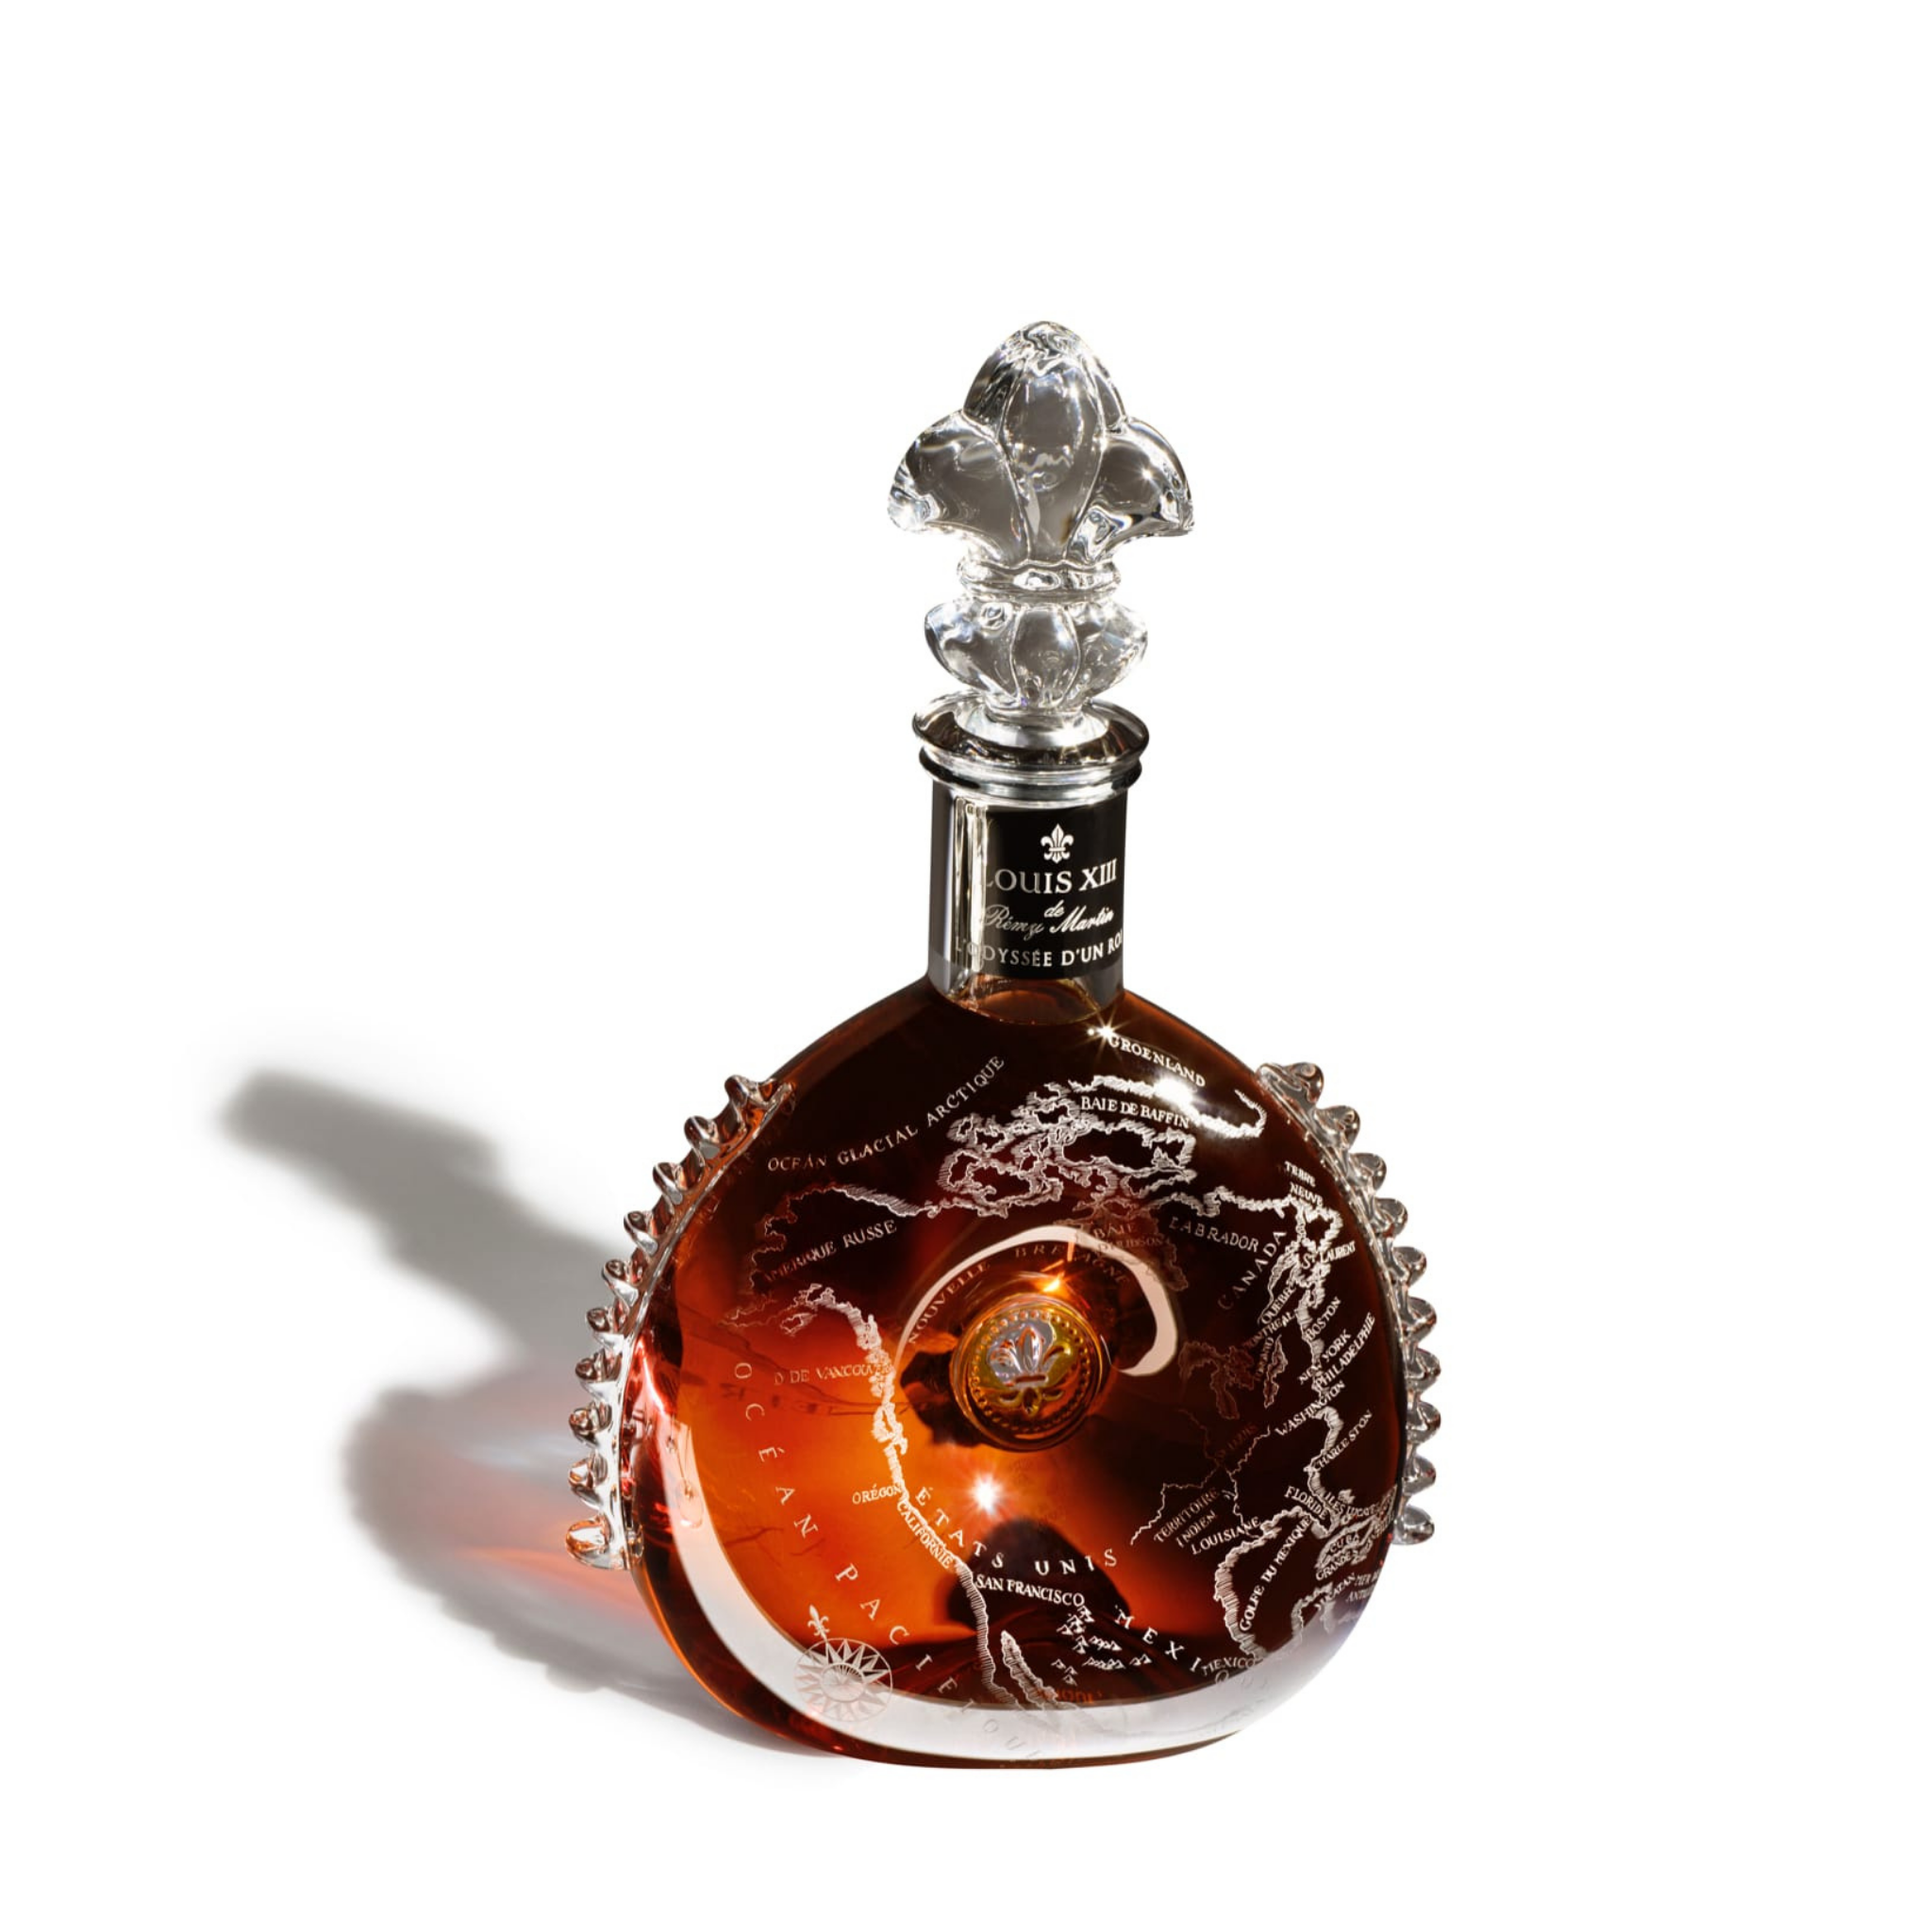 Remy Martin Louis XIII Cognac 40.0 abv NV (1 BT70)